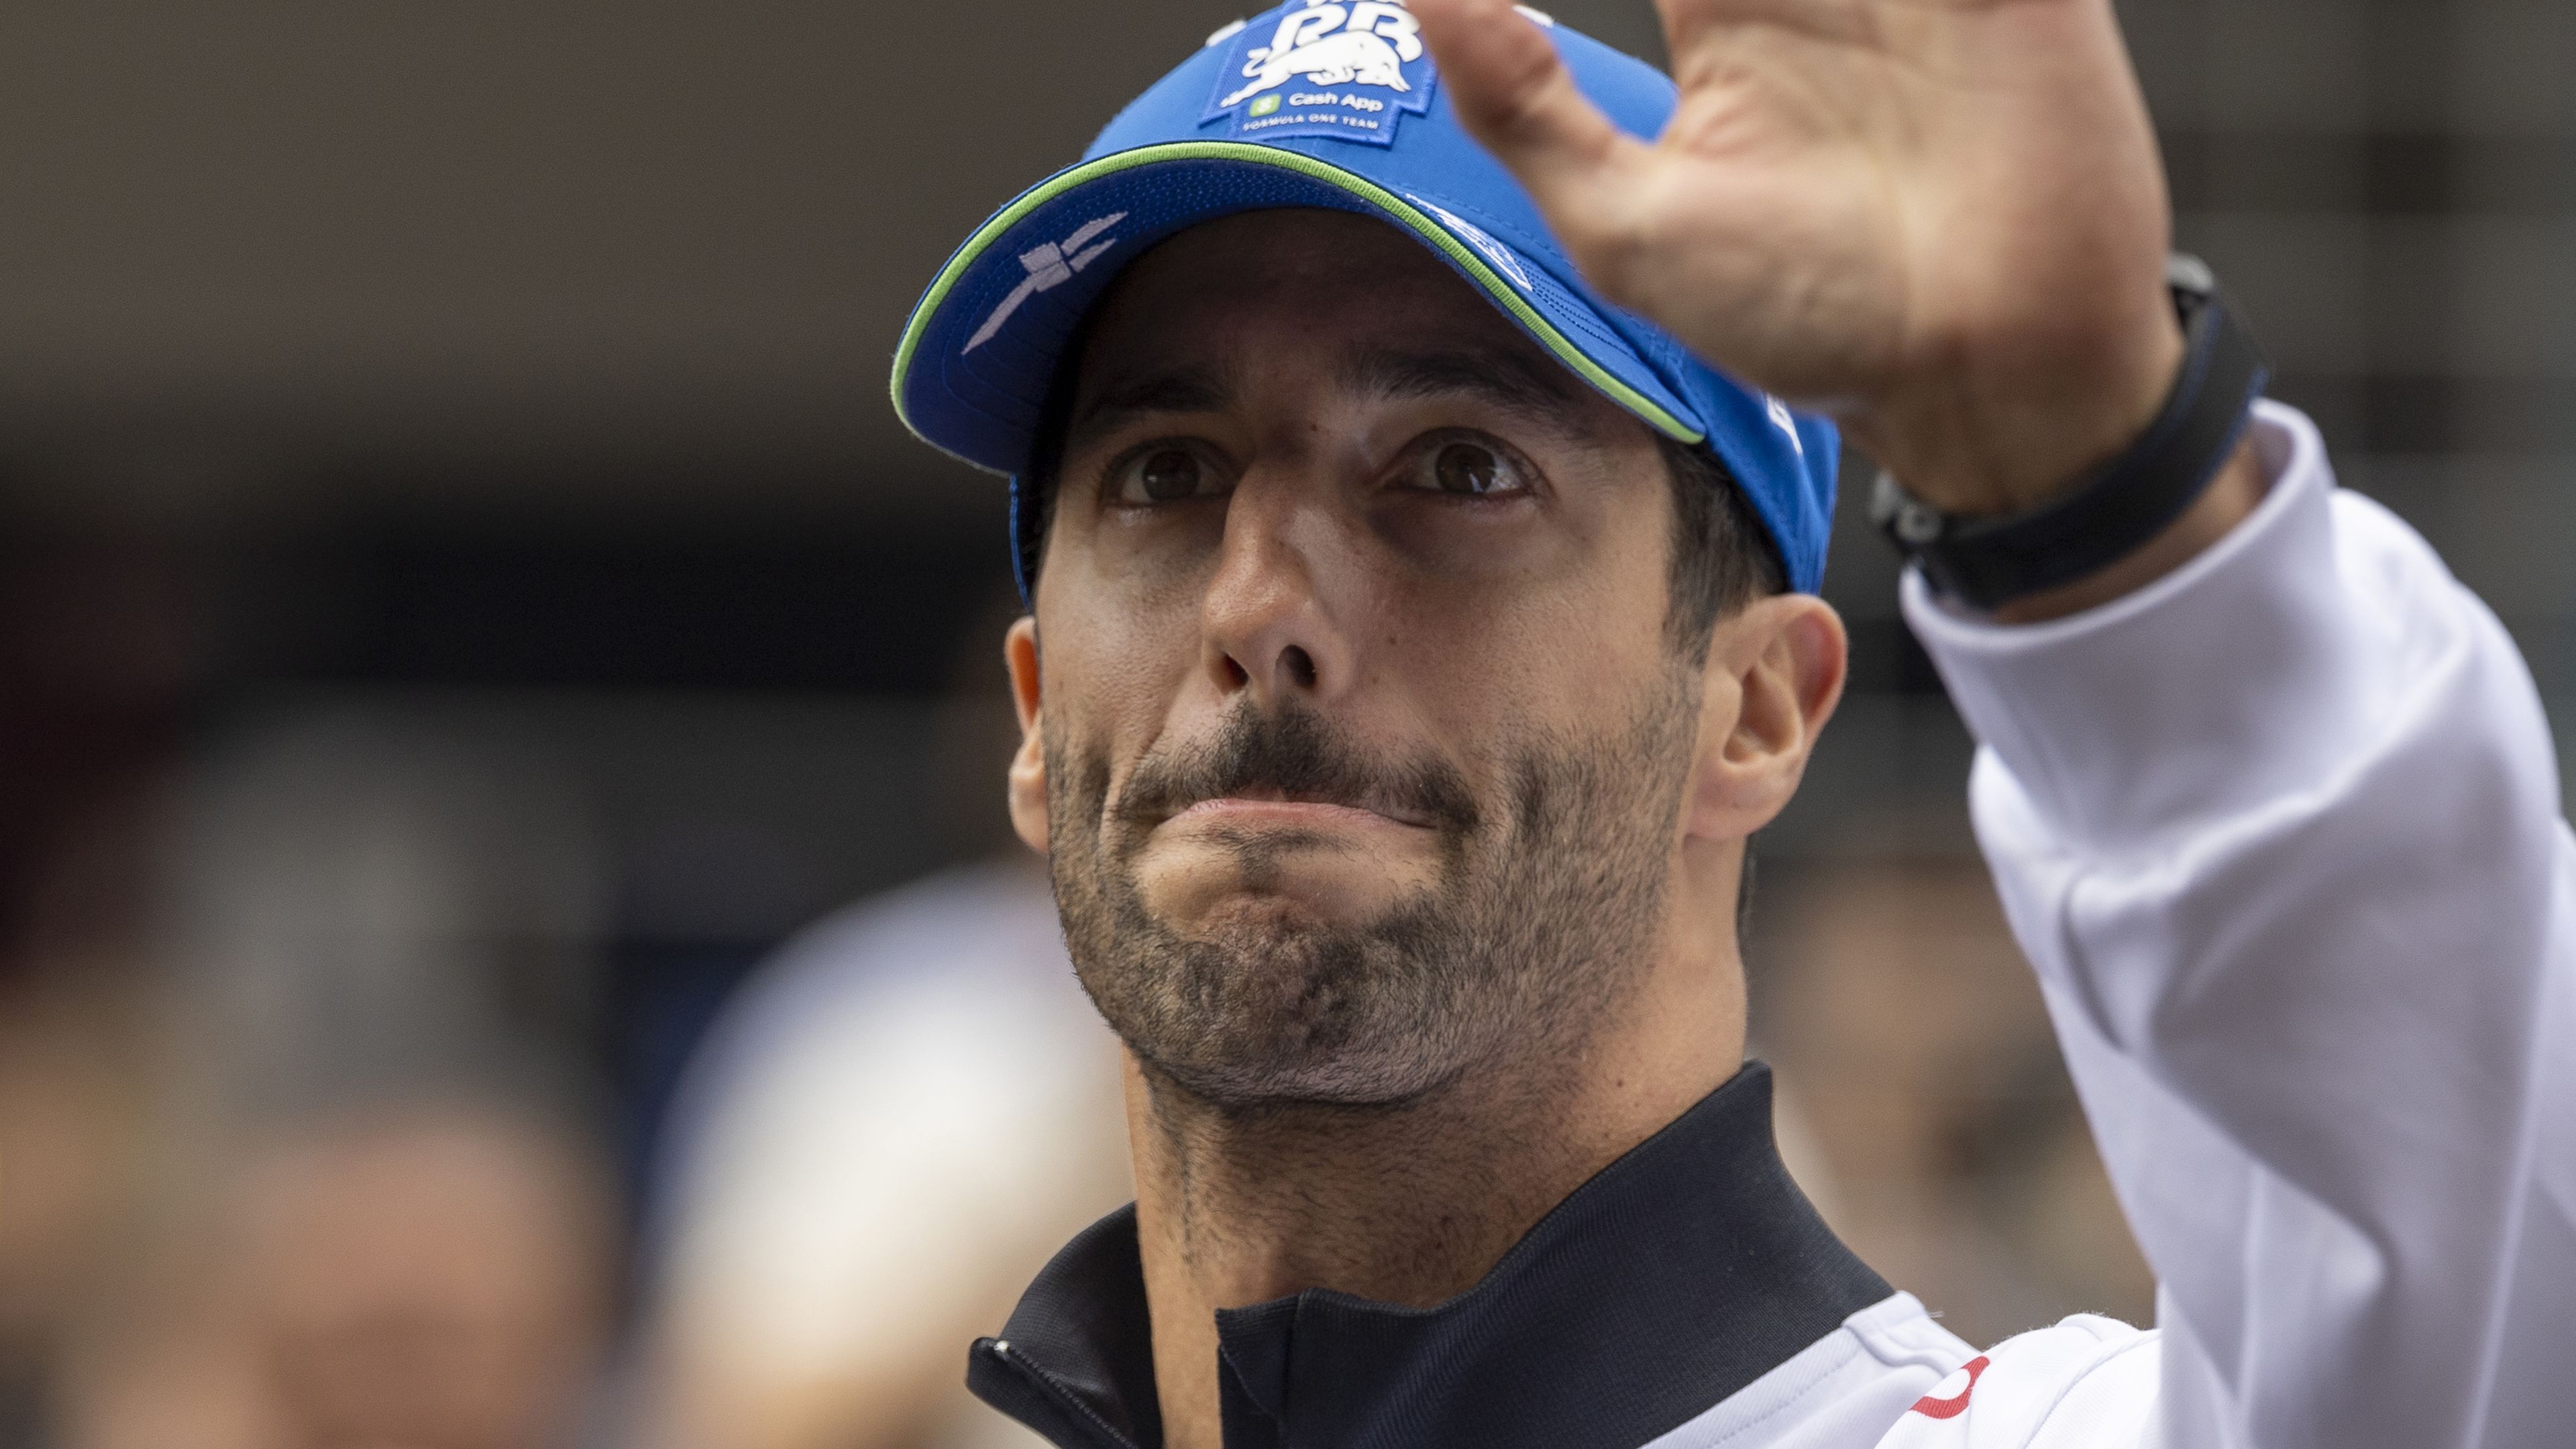 Daniel Ricciardo can 'absolutely' return to top form, says RB team boss Laurent Mekies